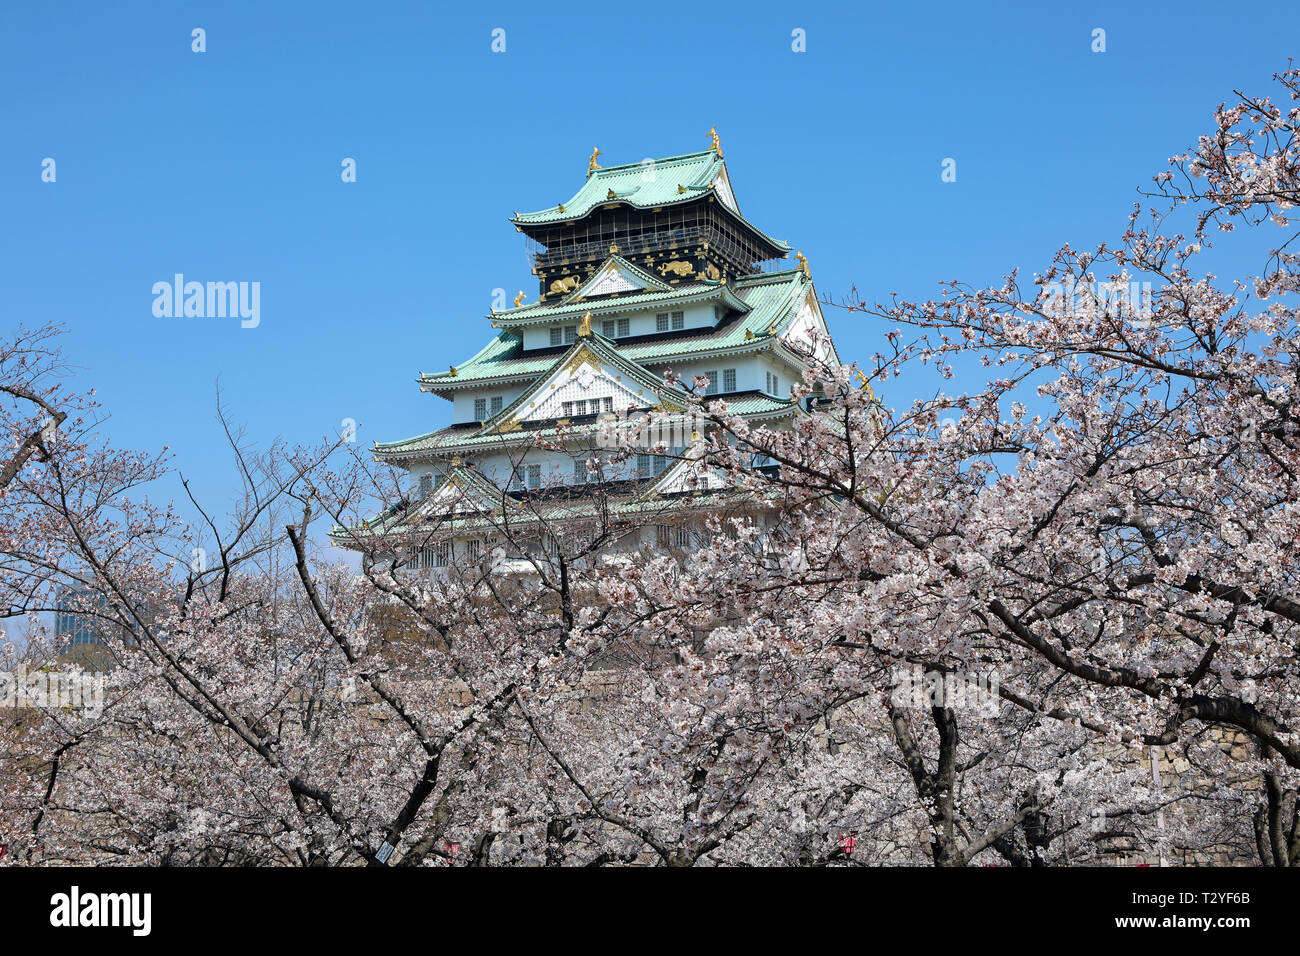 Osaka Castle seen through the branches of flowering cherry trees during Cherry Blossom season, Osaka, Japan Stock Photo